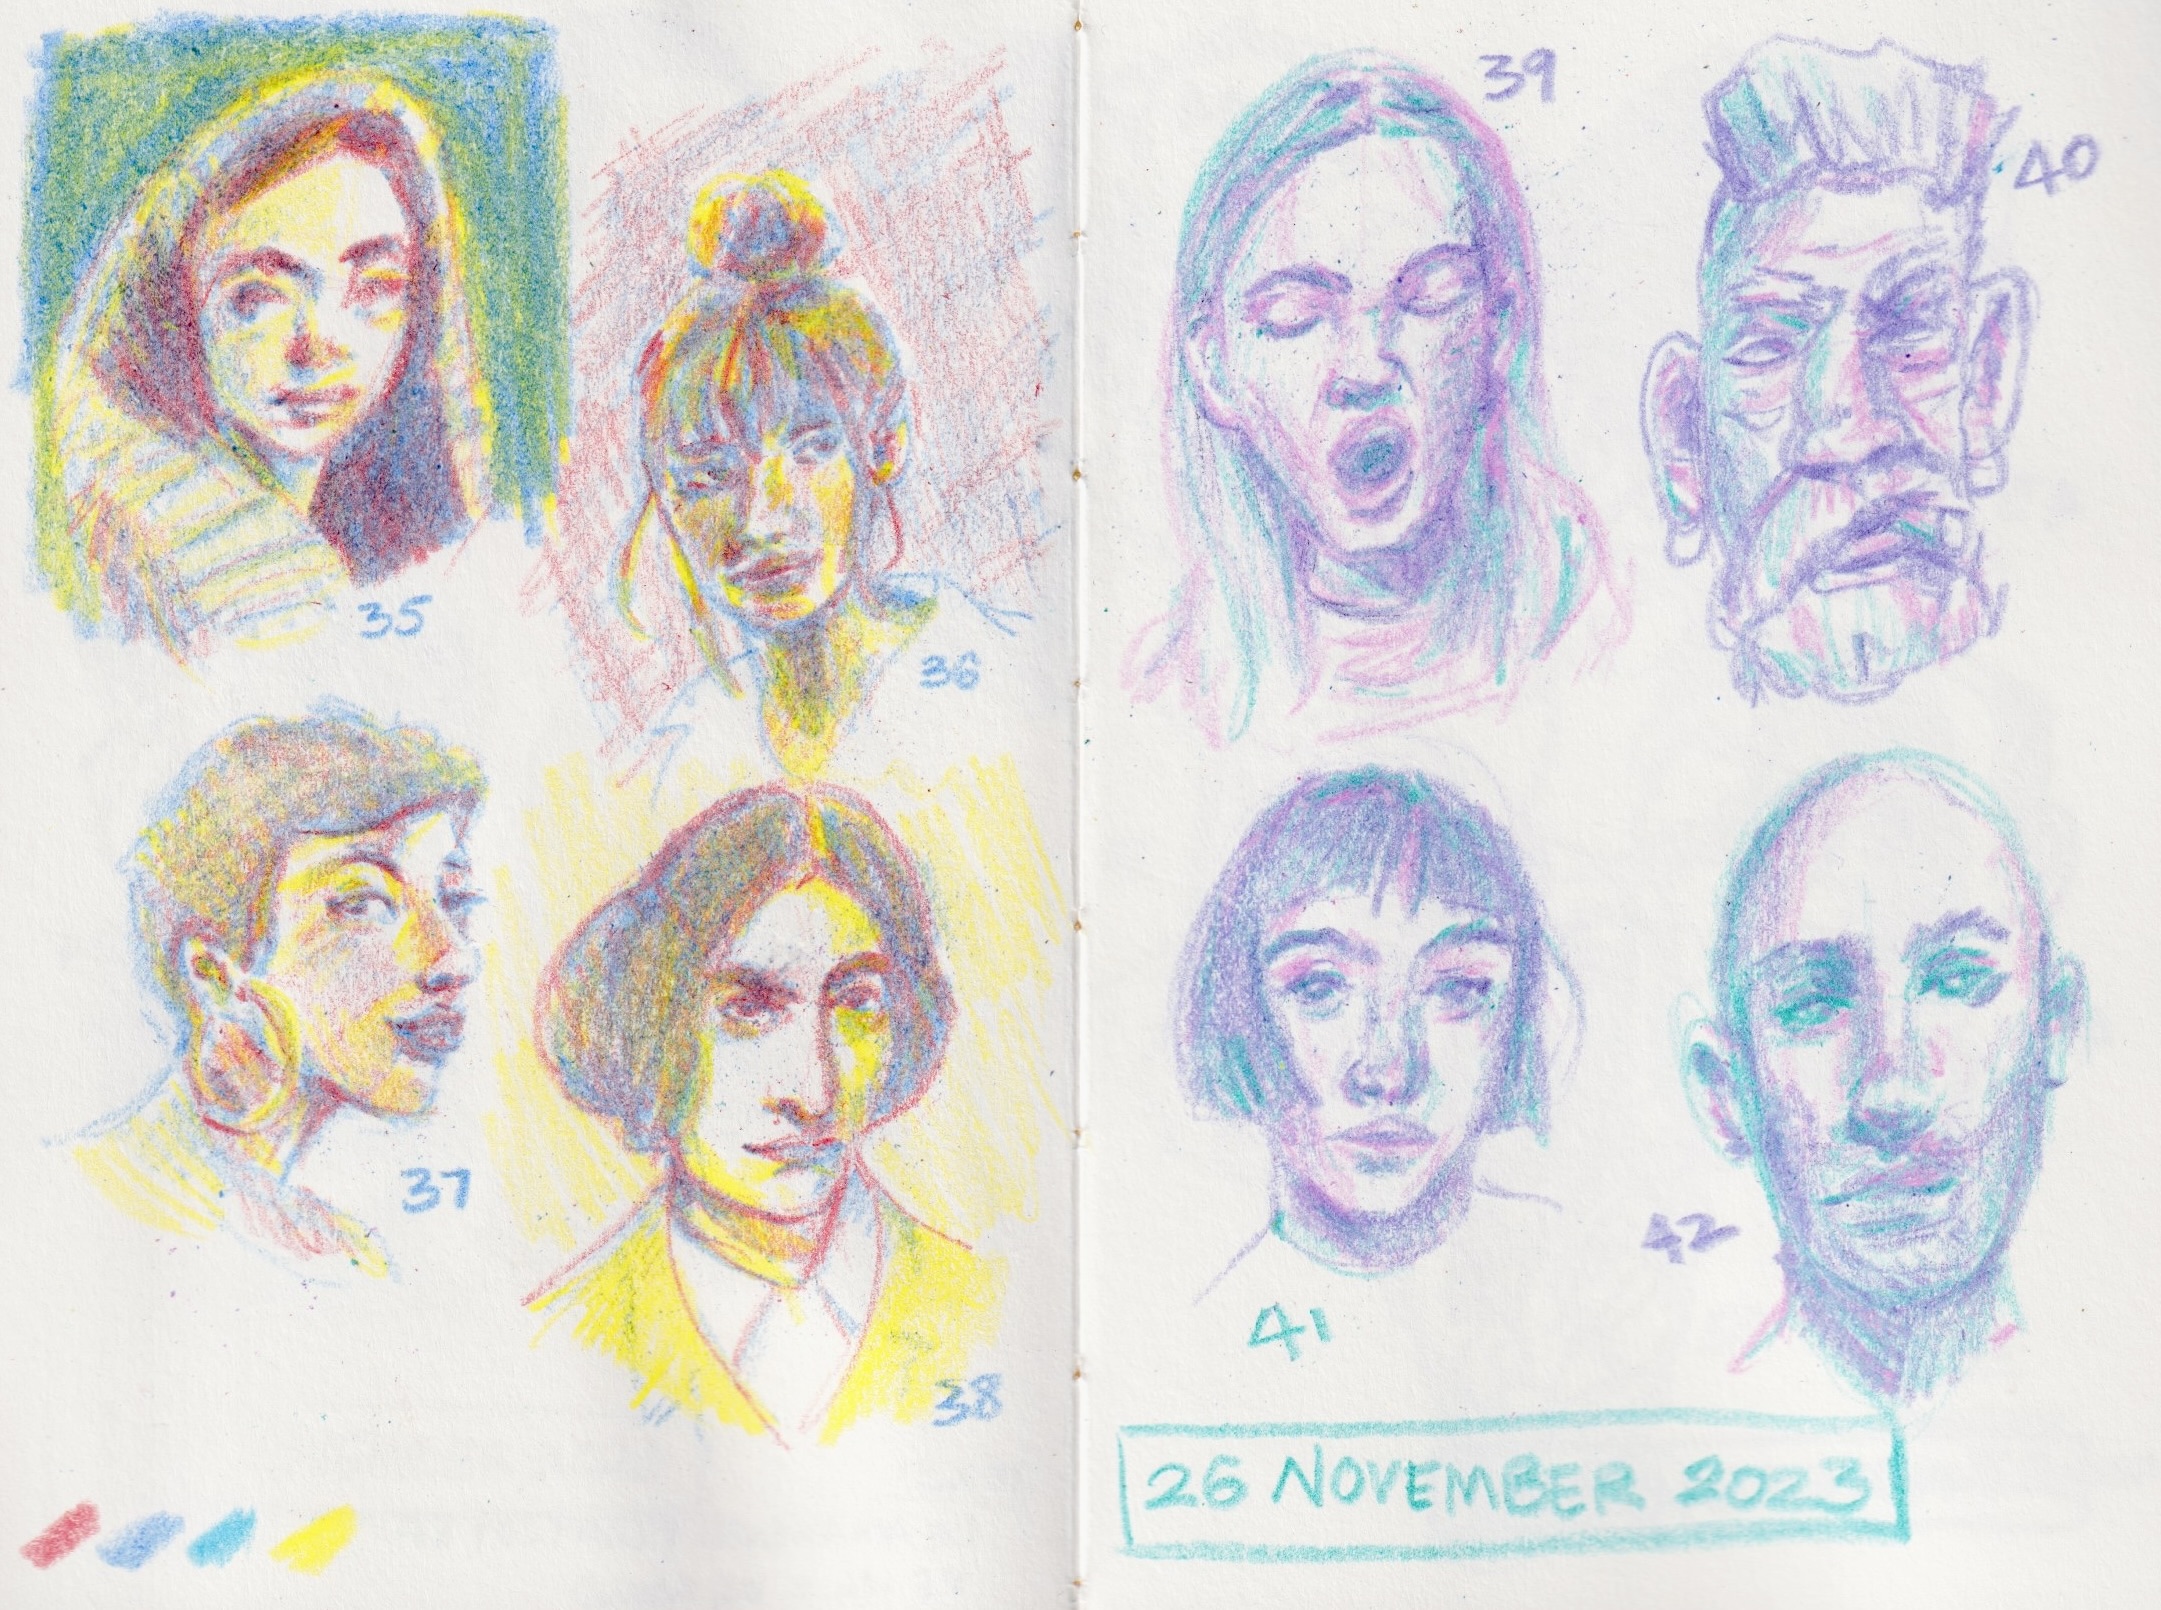 sketchbook4 1.jpeg|crayon sketches of faces